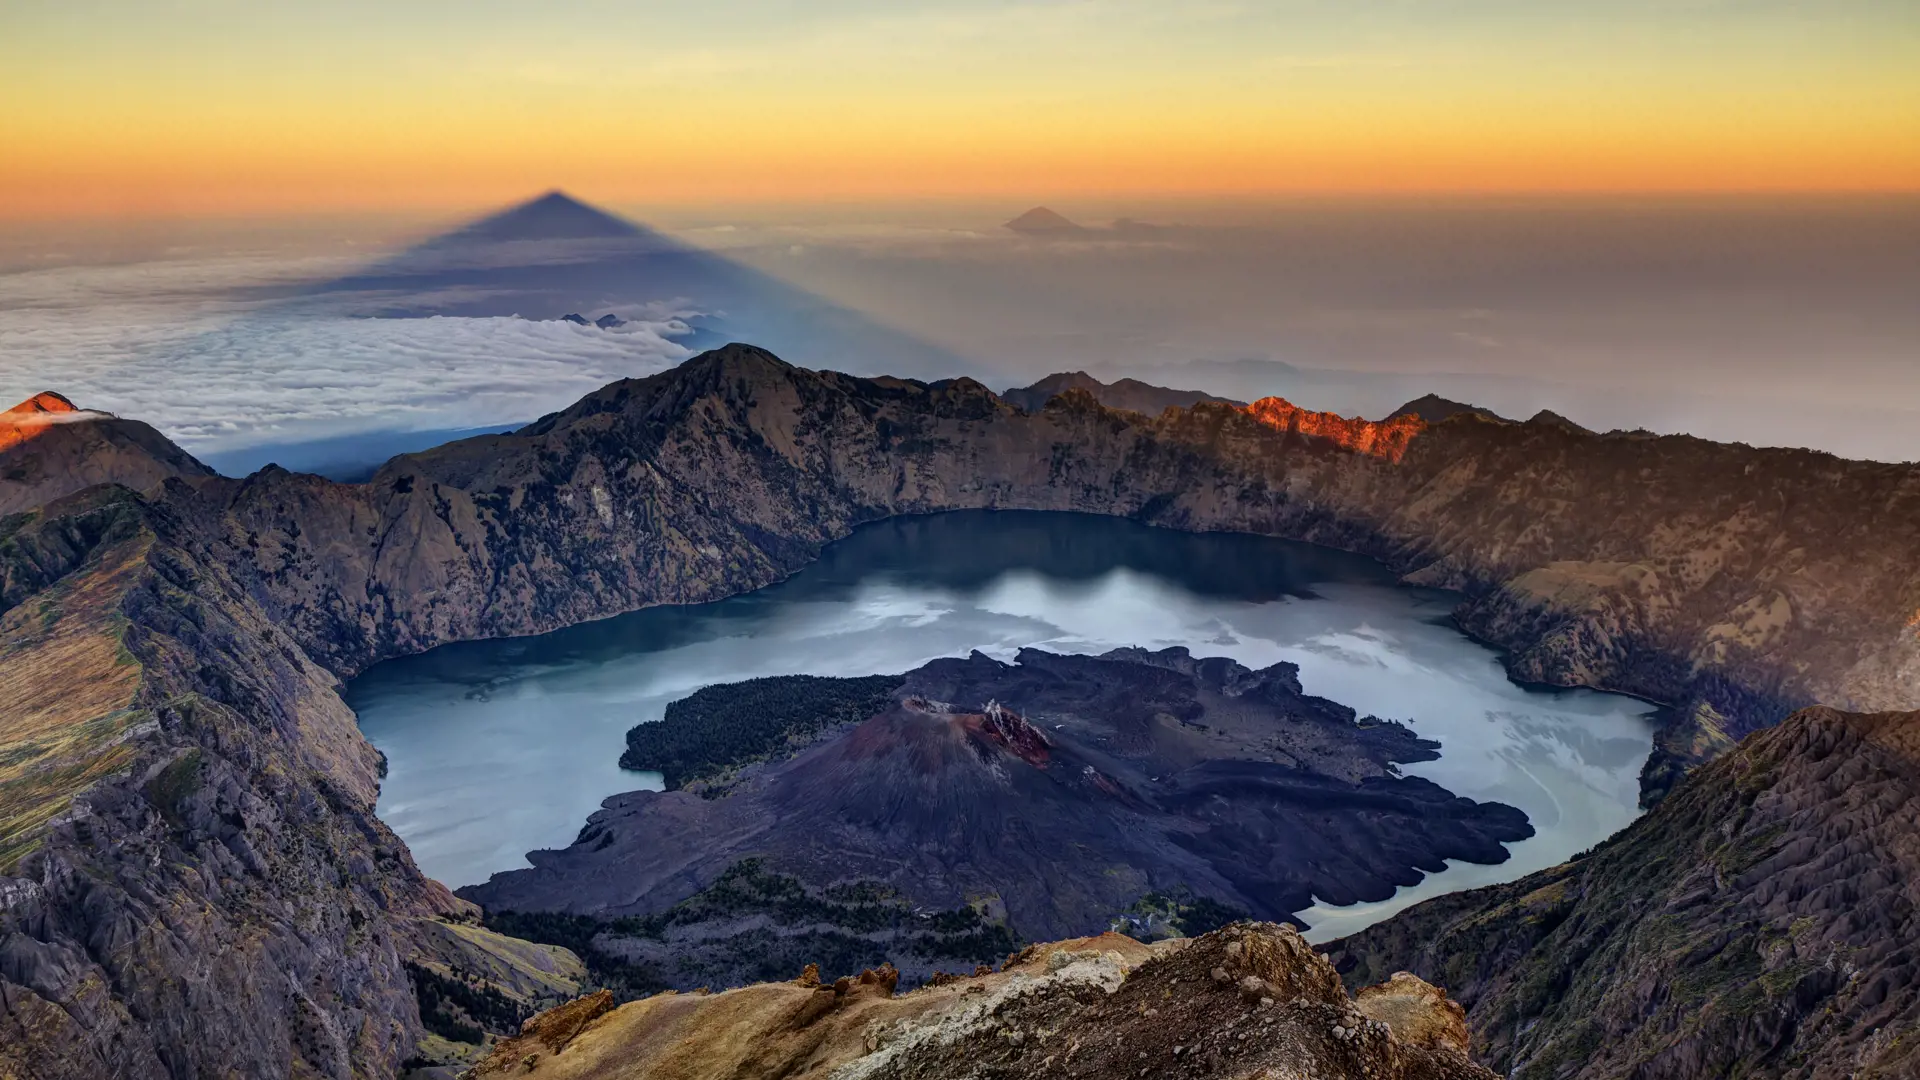 Mount Rinjani Sunrise.jpg